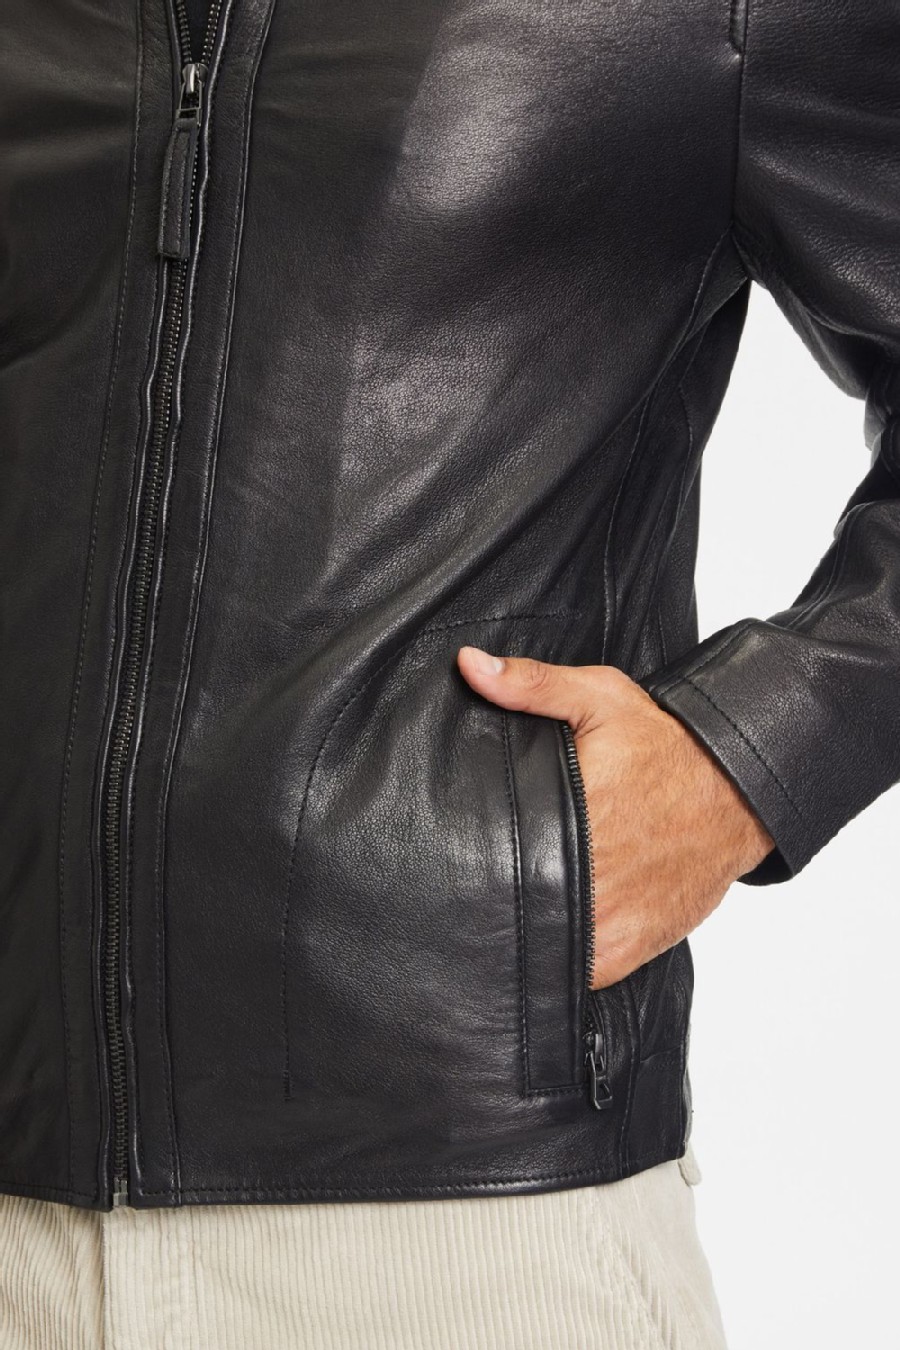 Leather jacket GIPSY 1201-0457-Black